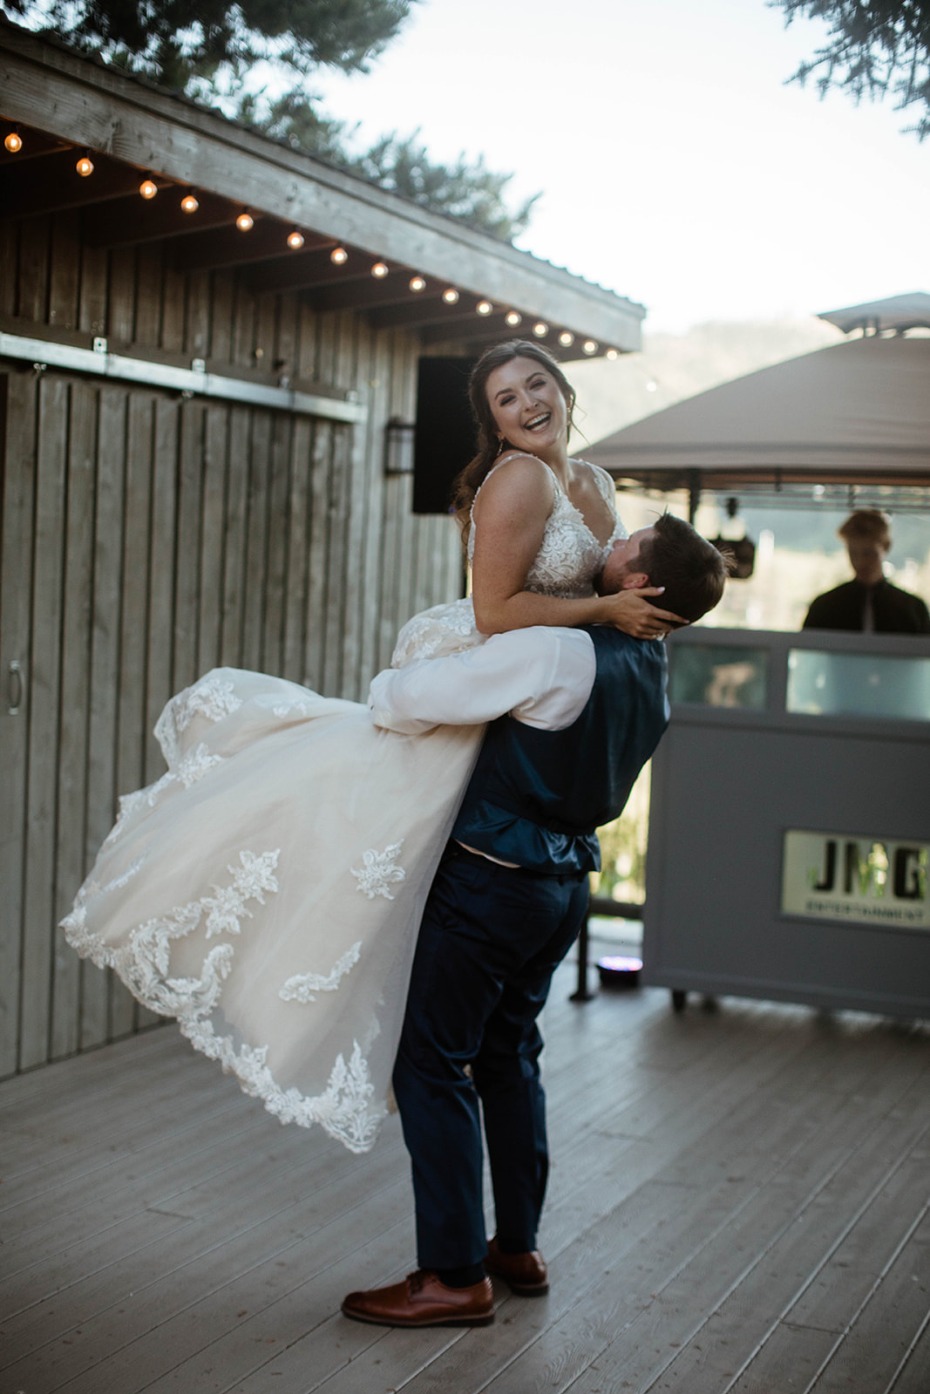 Your Wedding First Dance Doesnât Have to Look Like a Slow Dance at Prom